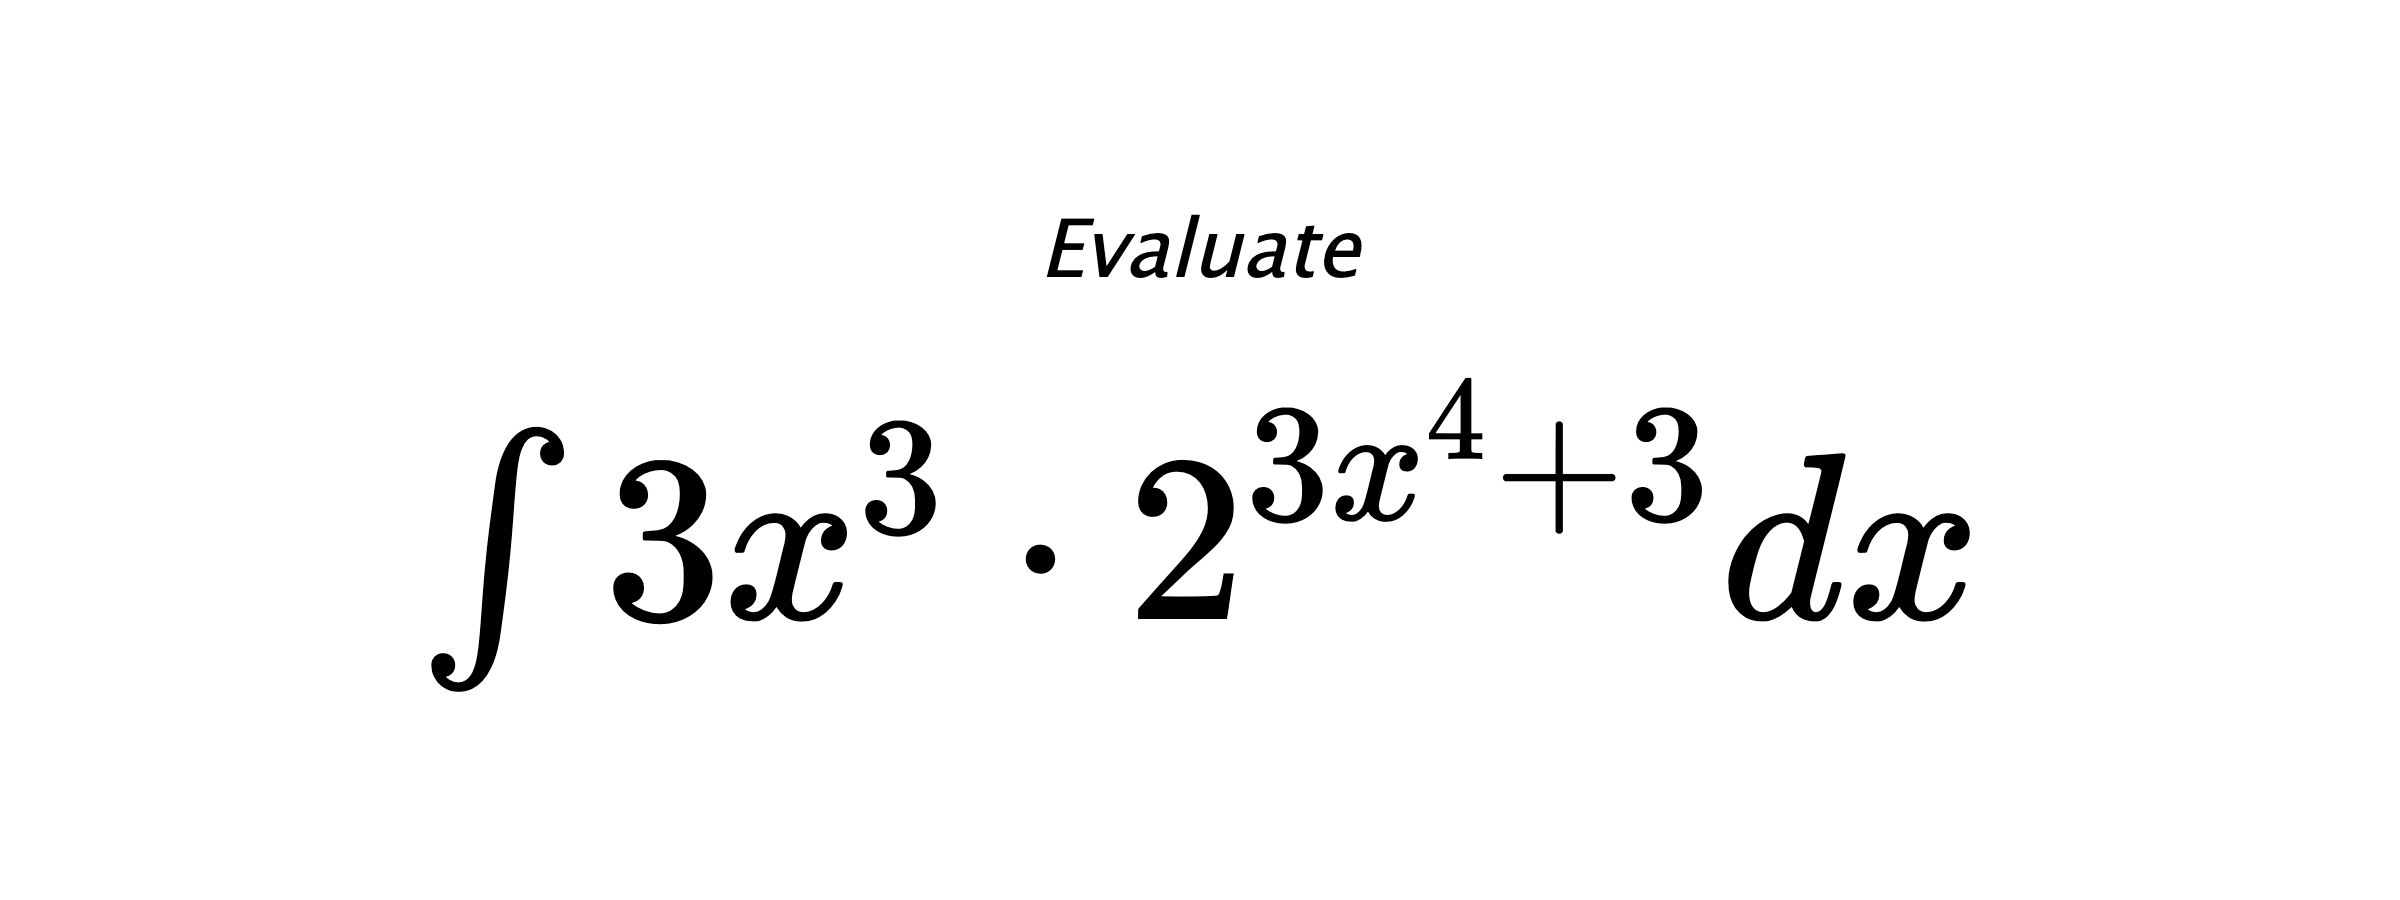 Evaluate $ \int 3x^3\cdot2^{3x^4+3}dx $